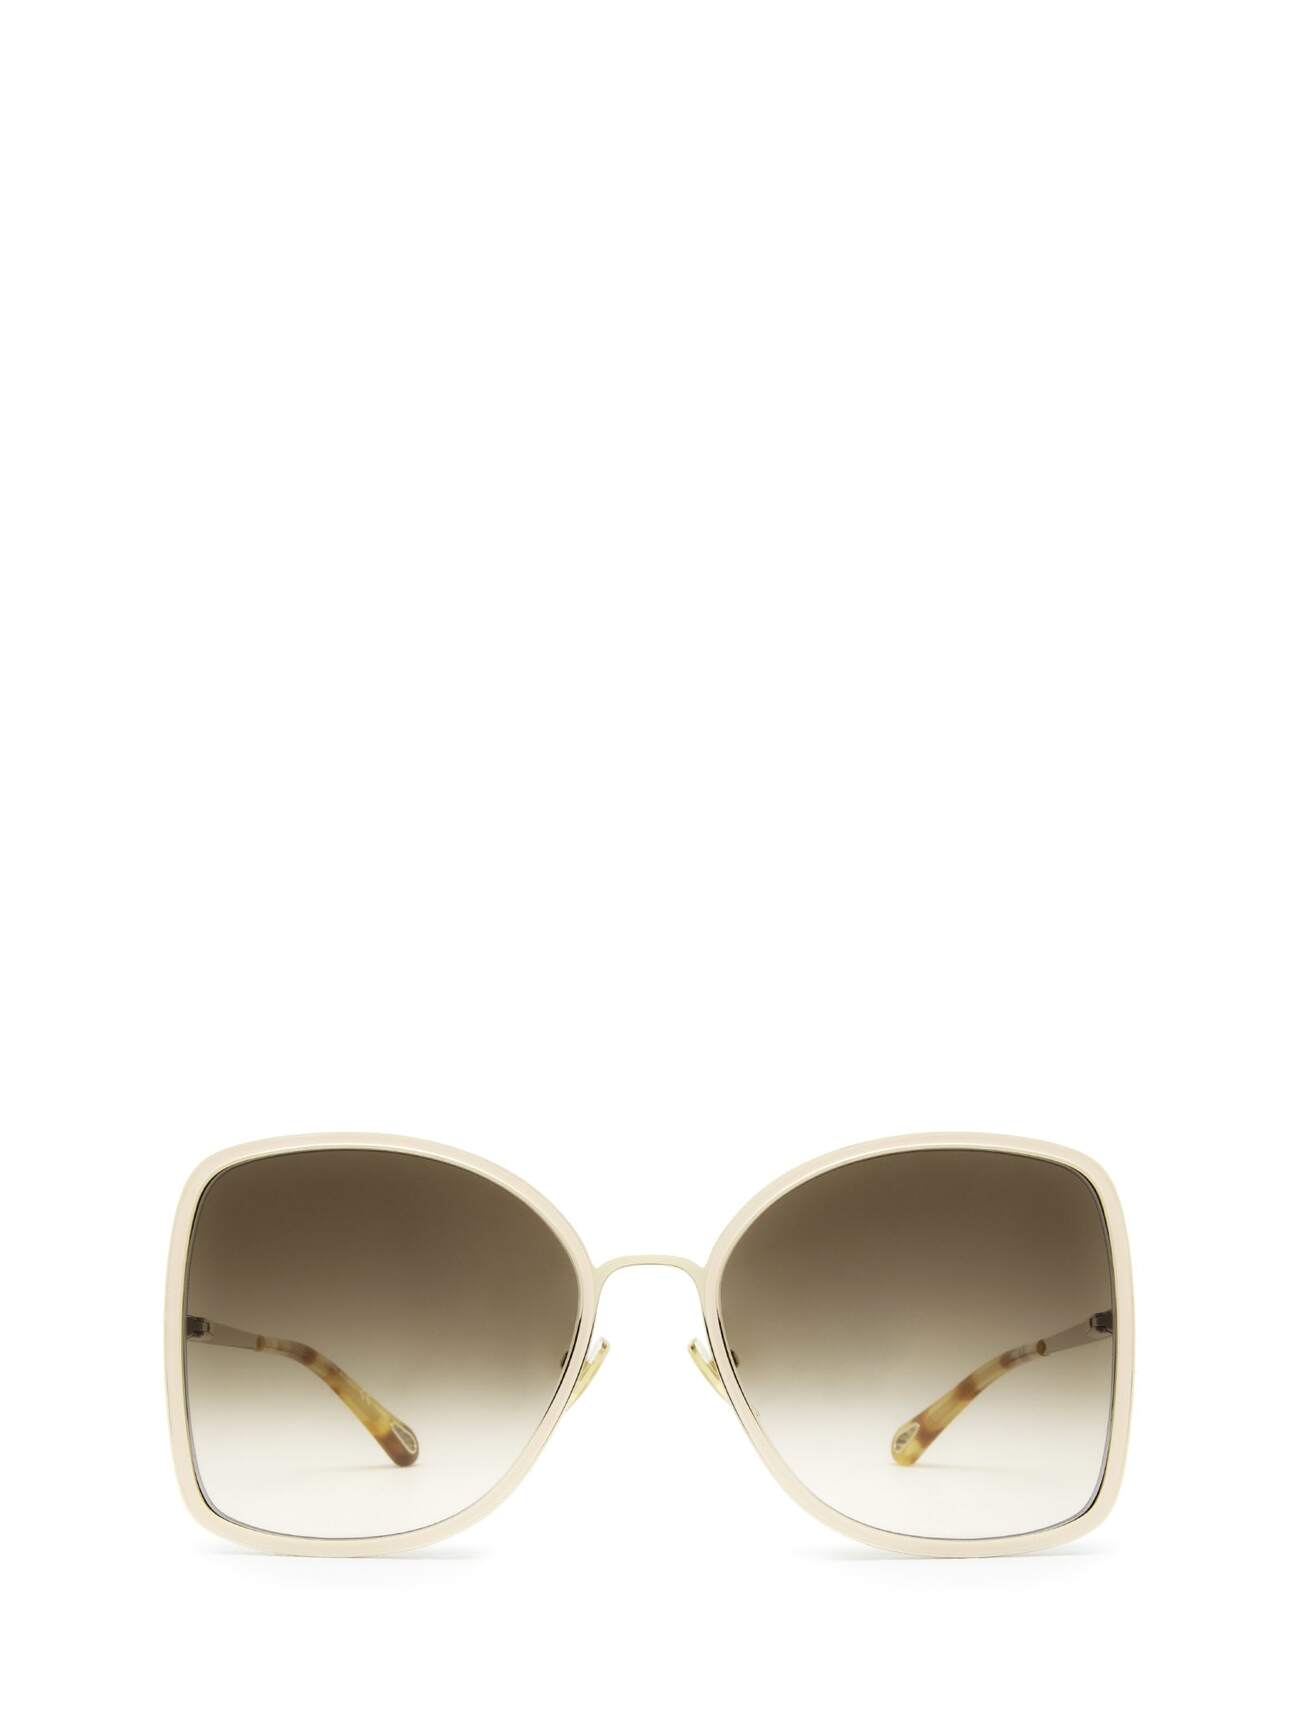 Chloé Eyewear Ch0101s Gold & Nude Sunglasses